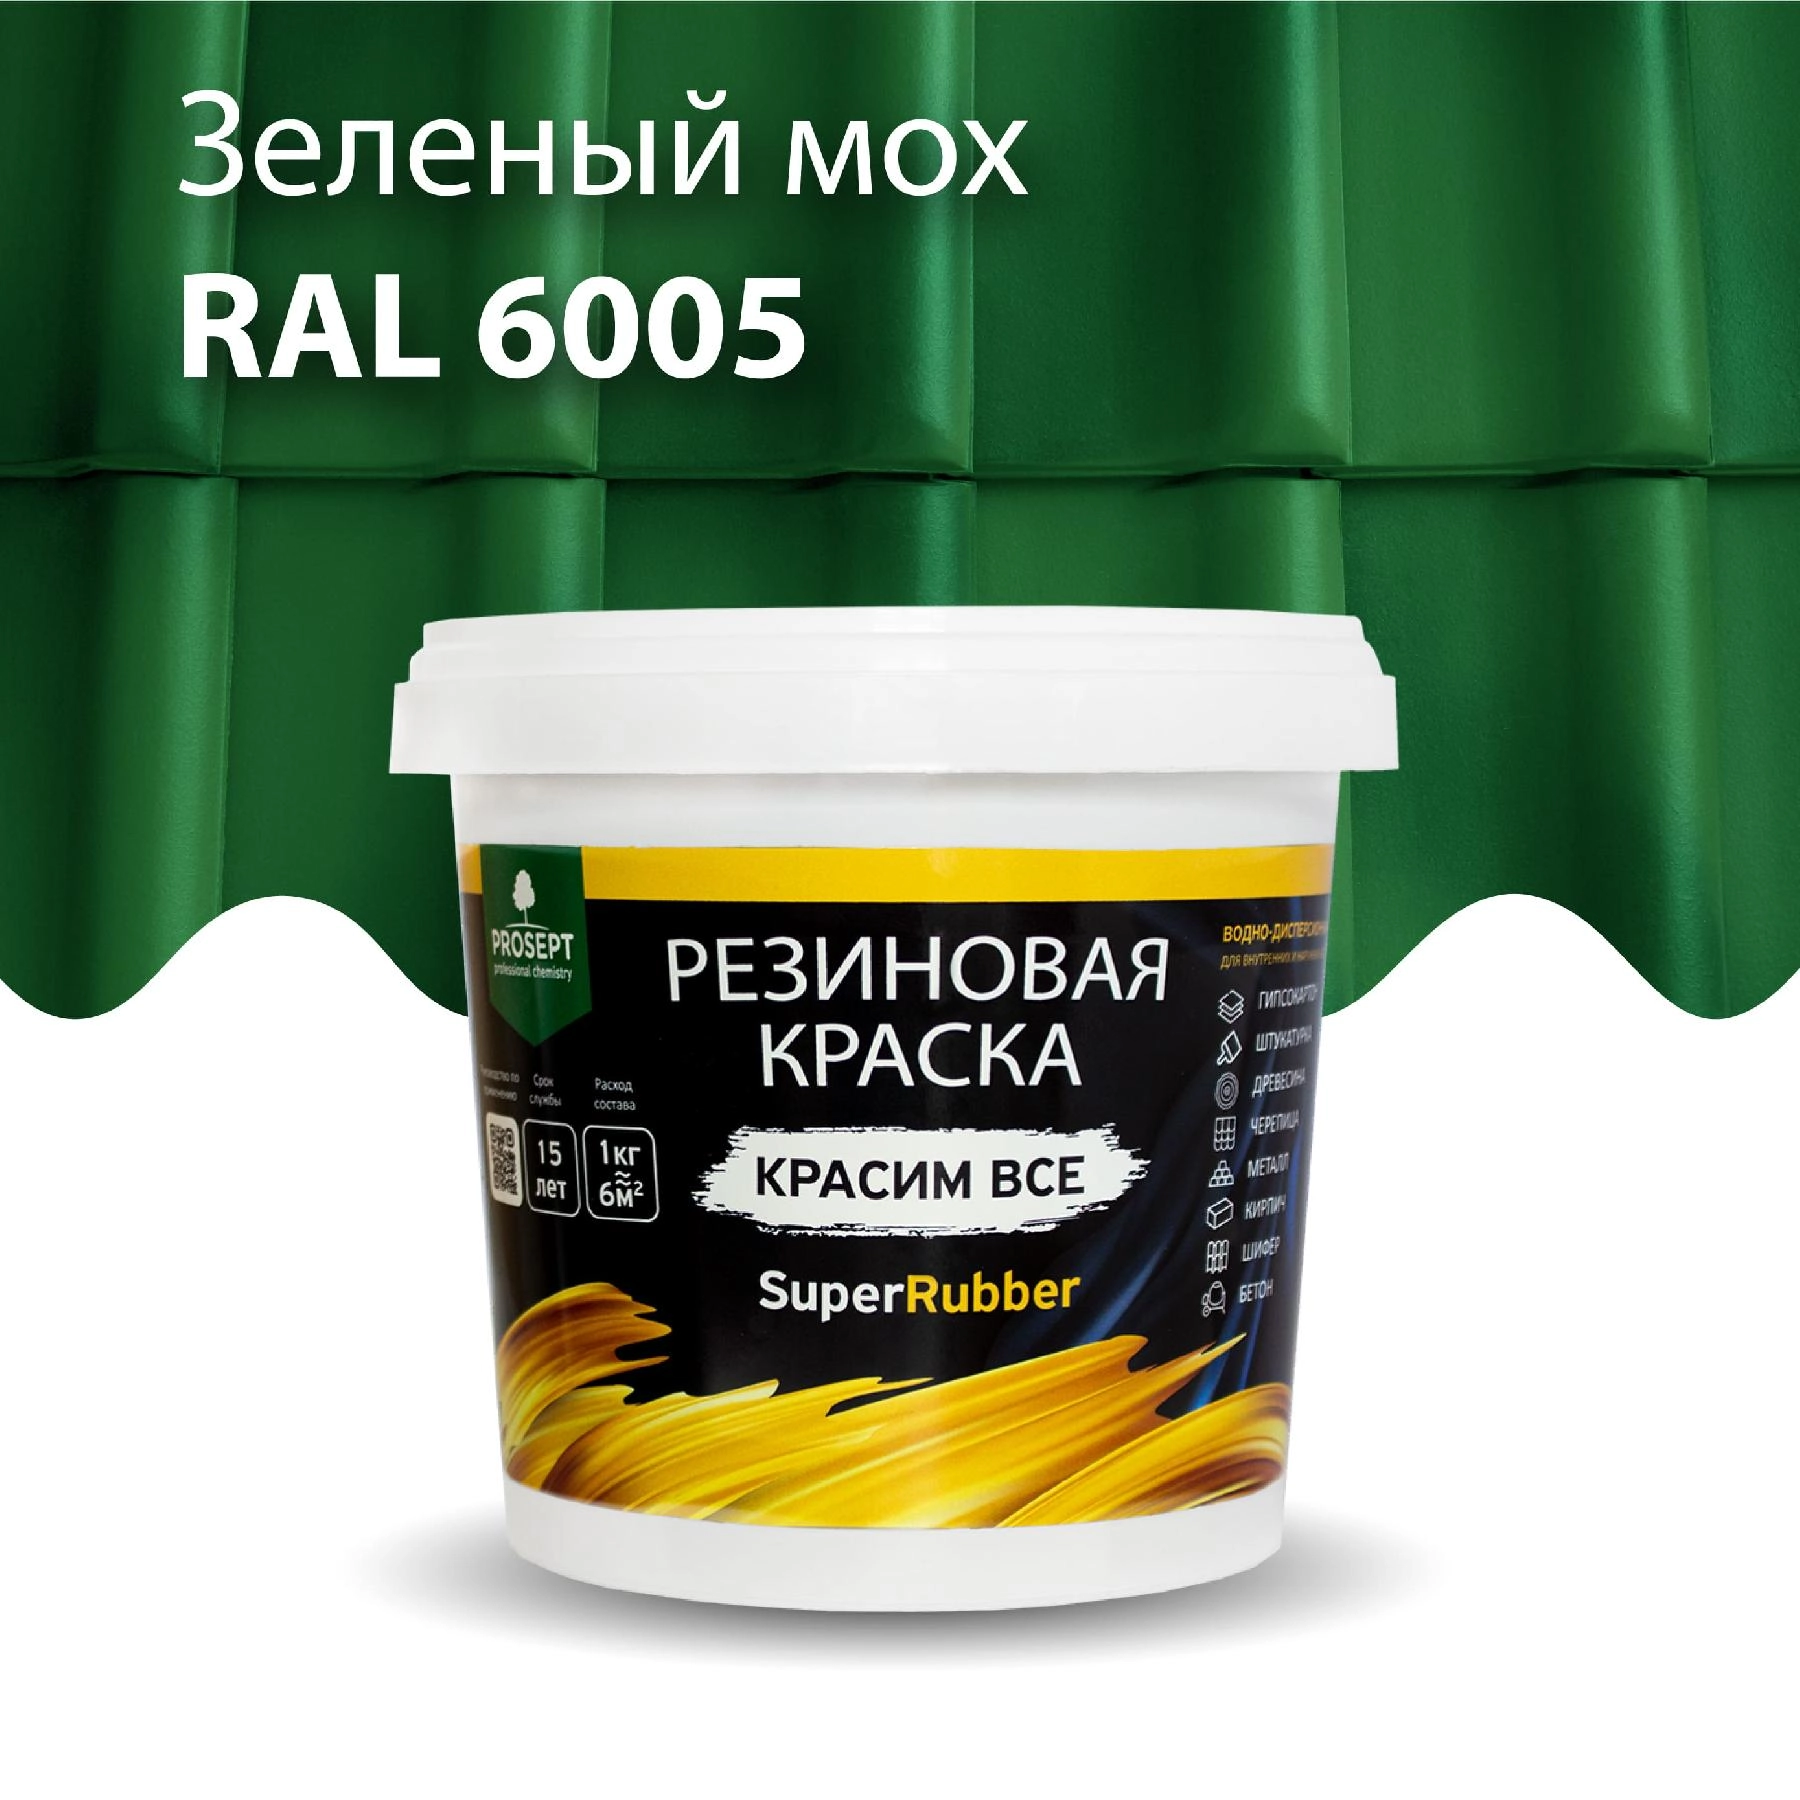 Краска резиновая PROSEPT SuperRubber, зеленый мох Ral 6005 / 3 кг